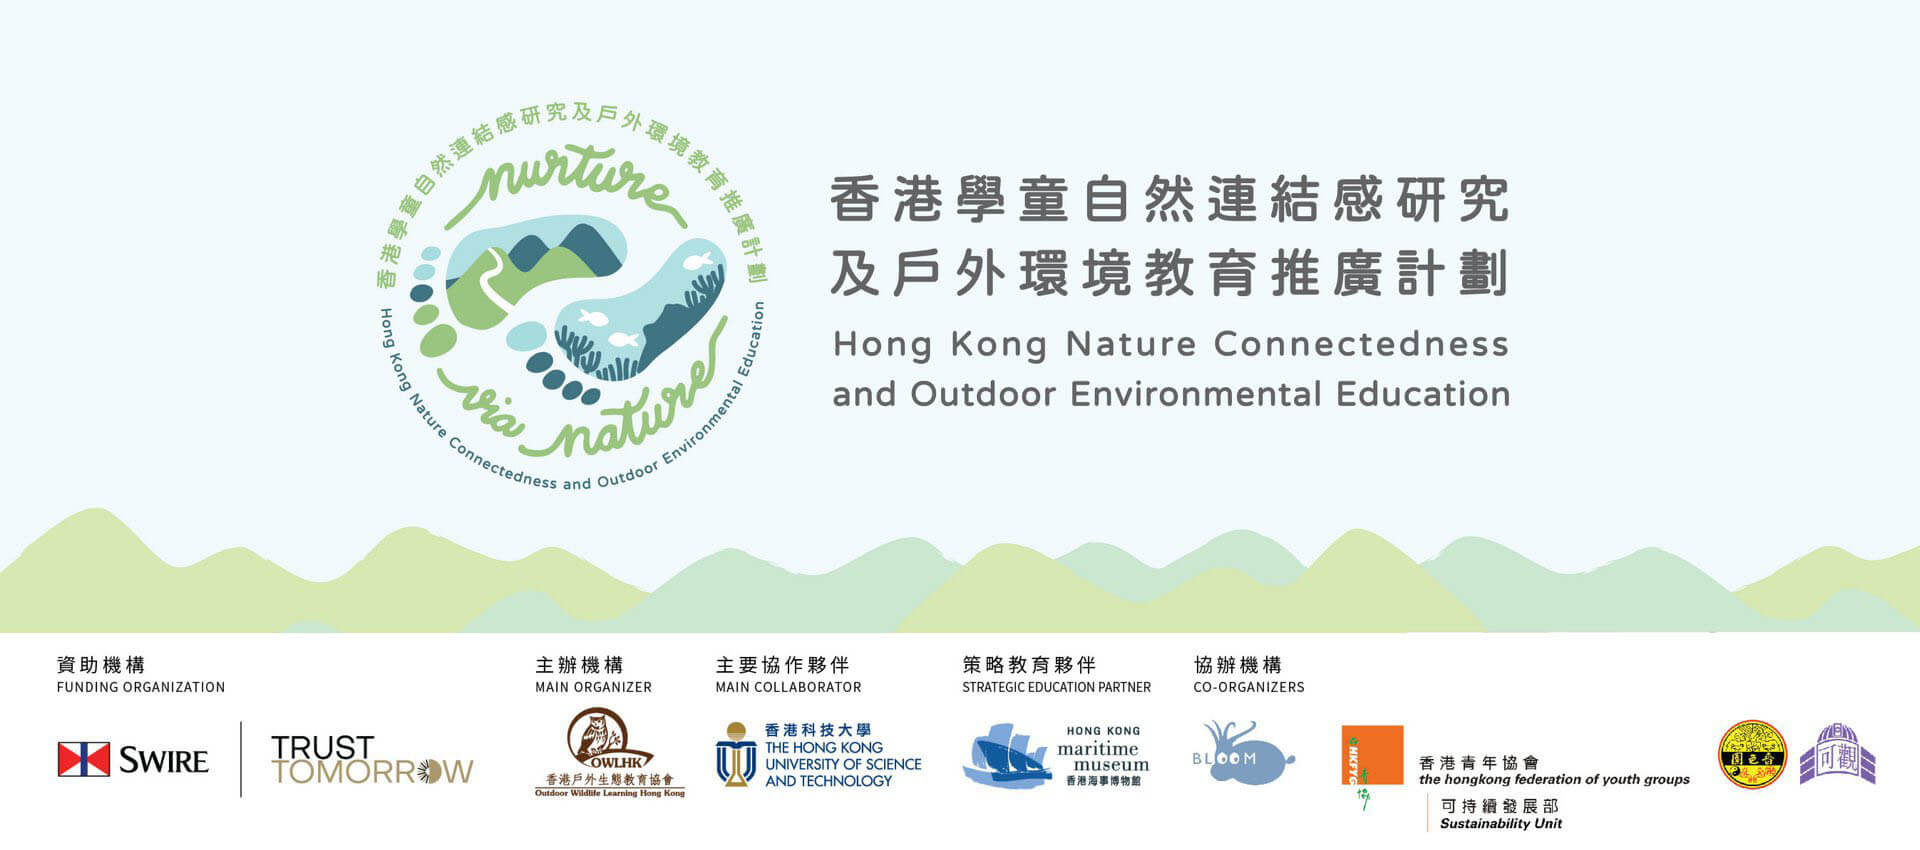 Nurture via Nature: Hong Kong Nature Connectedness and Outdoor Environmental Education